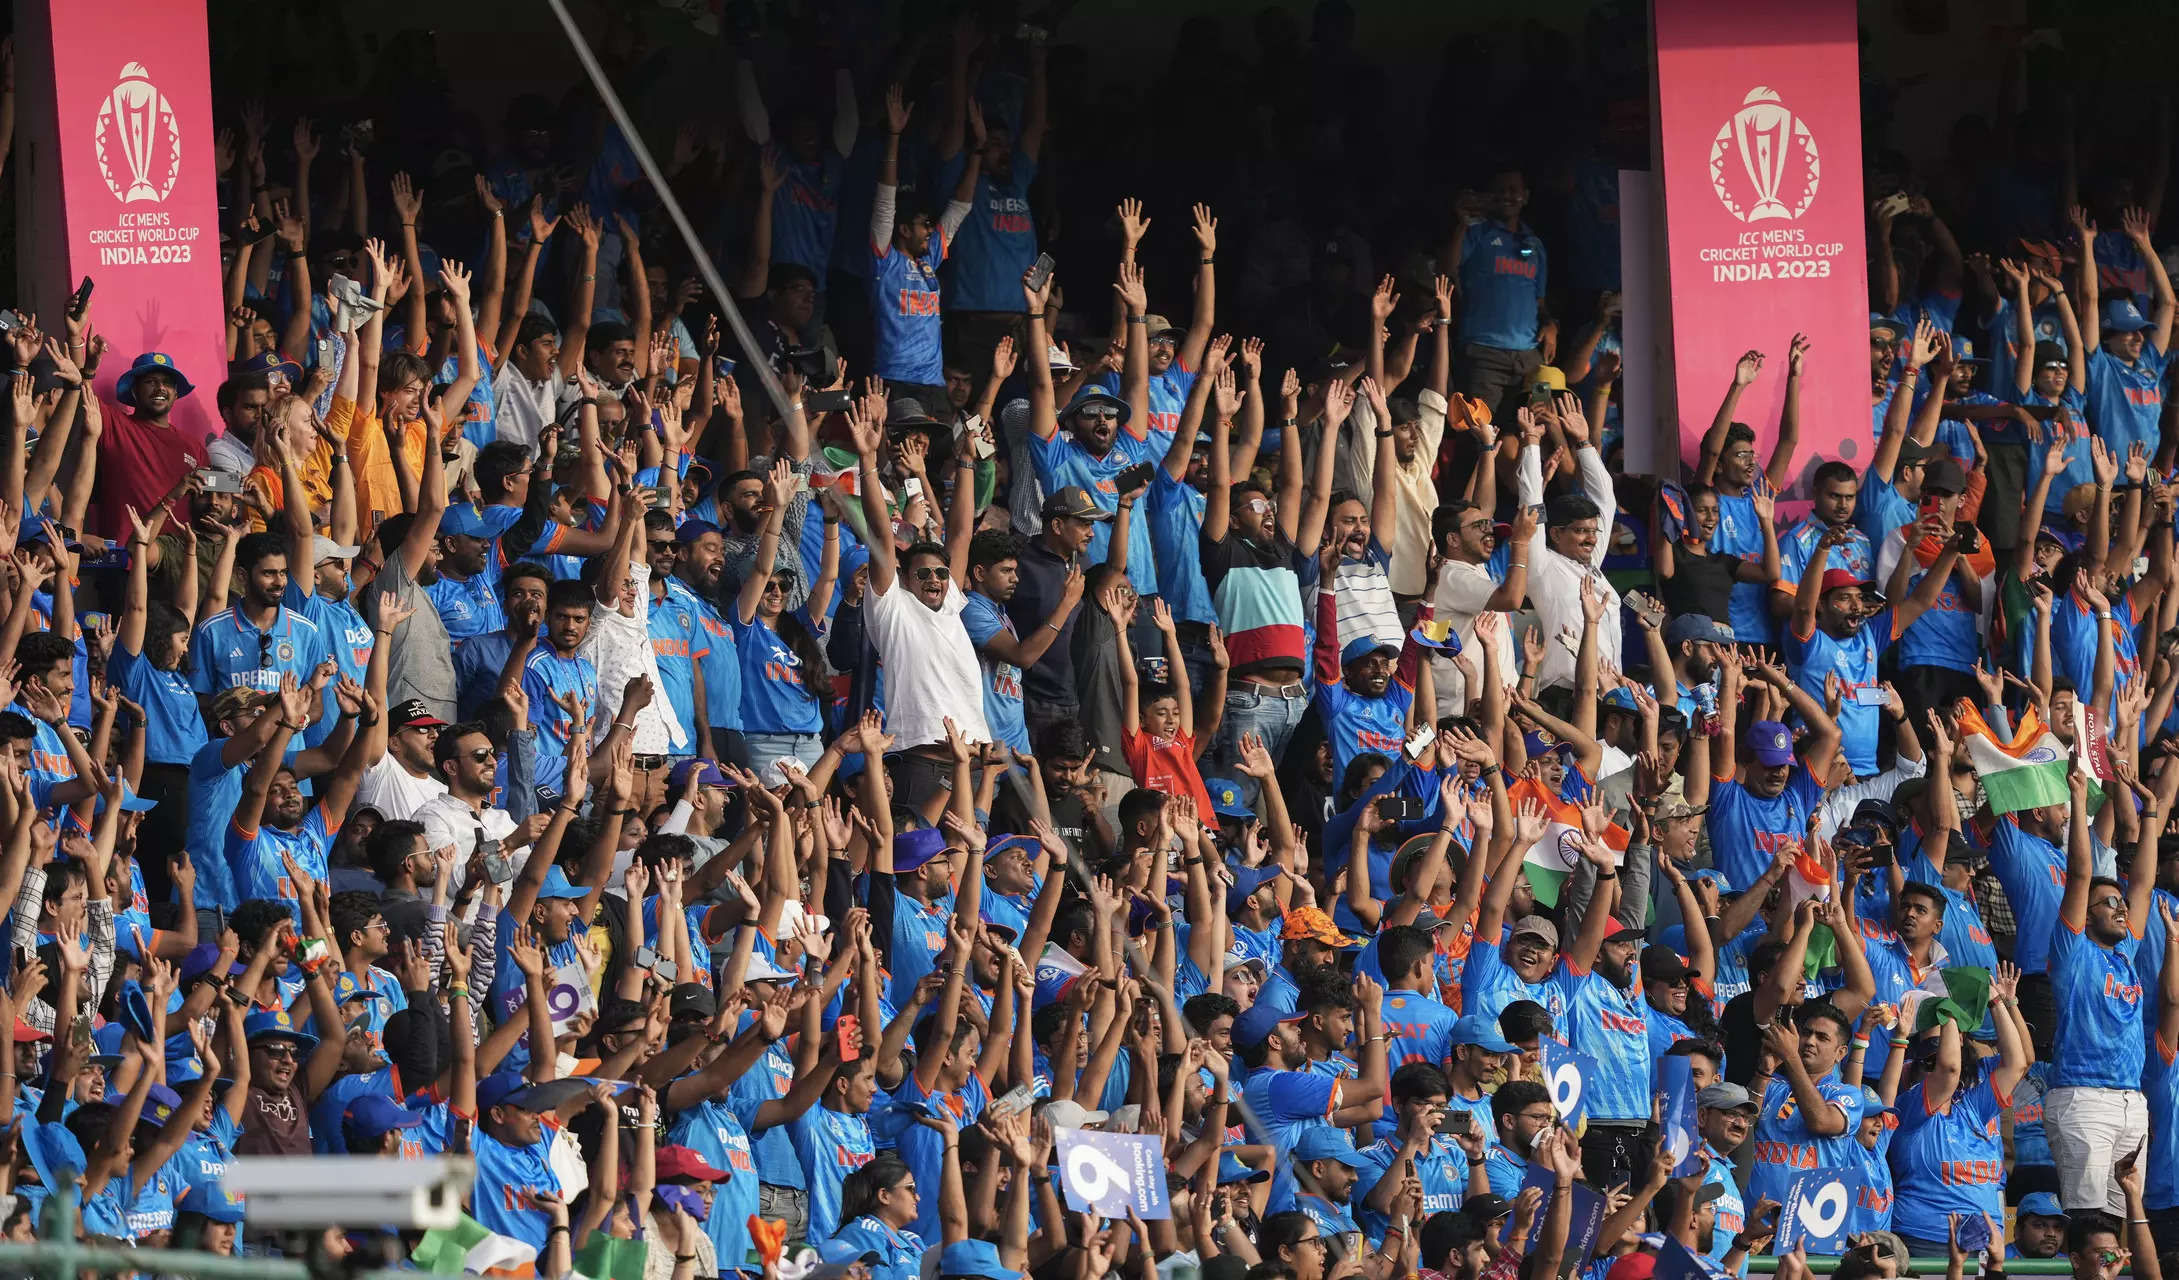 <p>Bengaluru: Spectators during the ICC Men's Cricket World Cup 2023 match between India and Netherlands, at M Chinnaswamy Stadium in Bengaluru. (PTI Photo/Shahbaz Khan)</p>